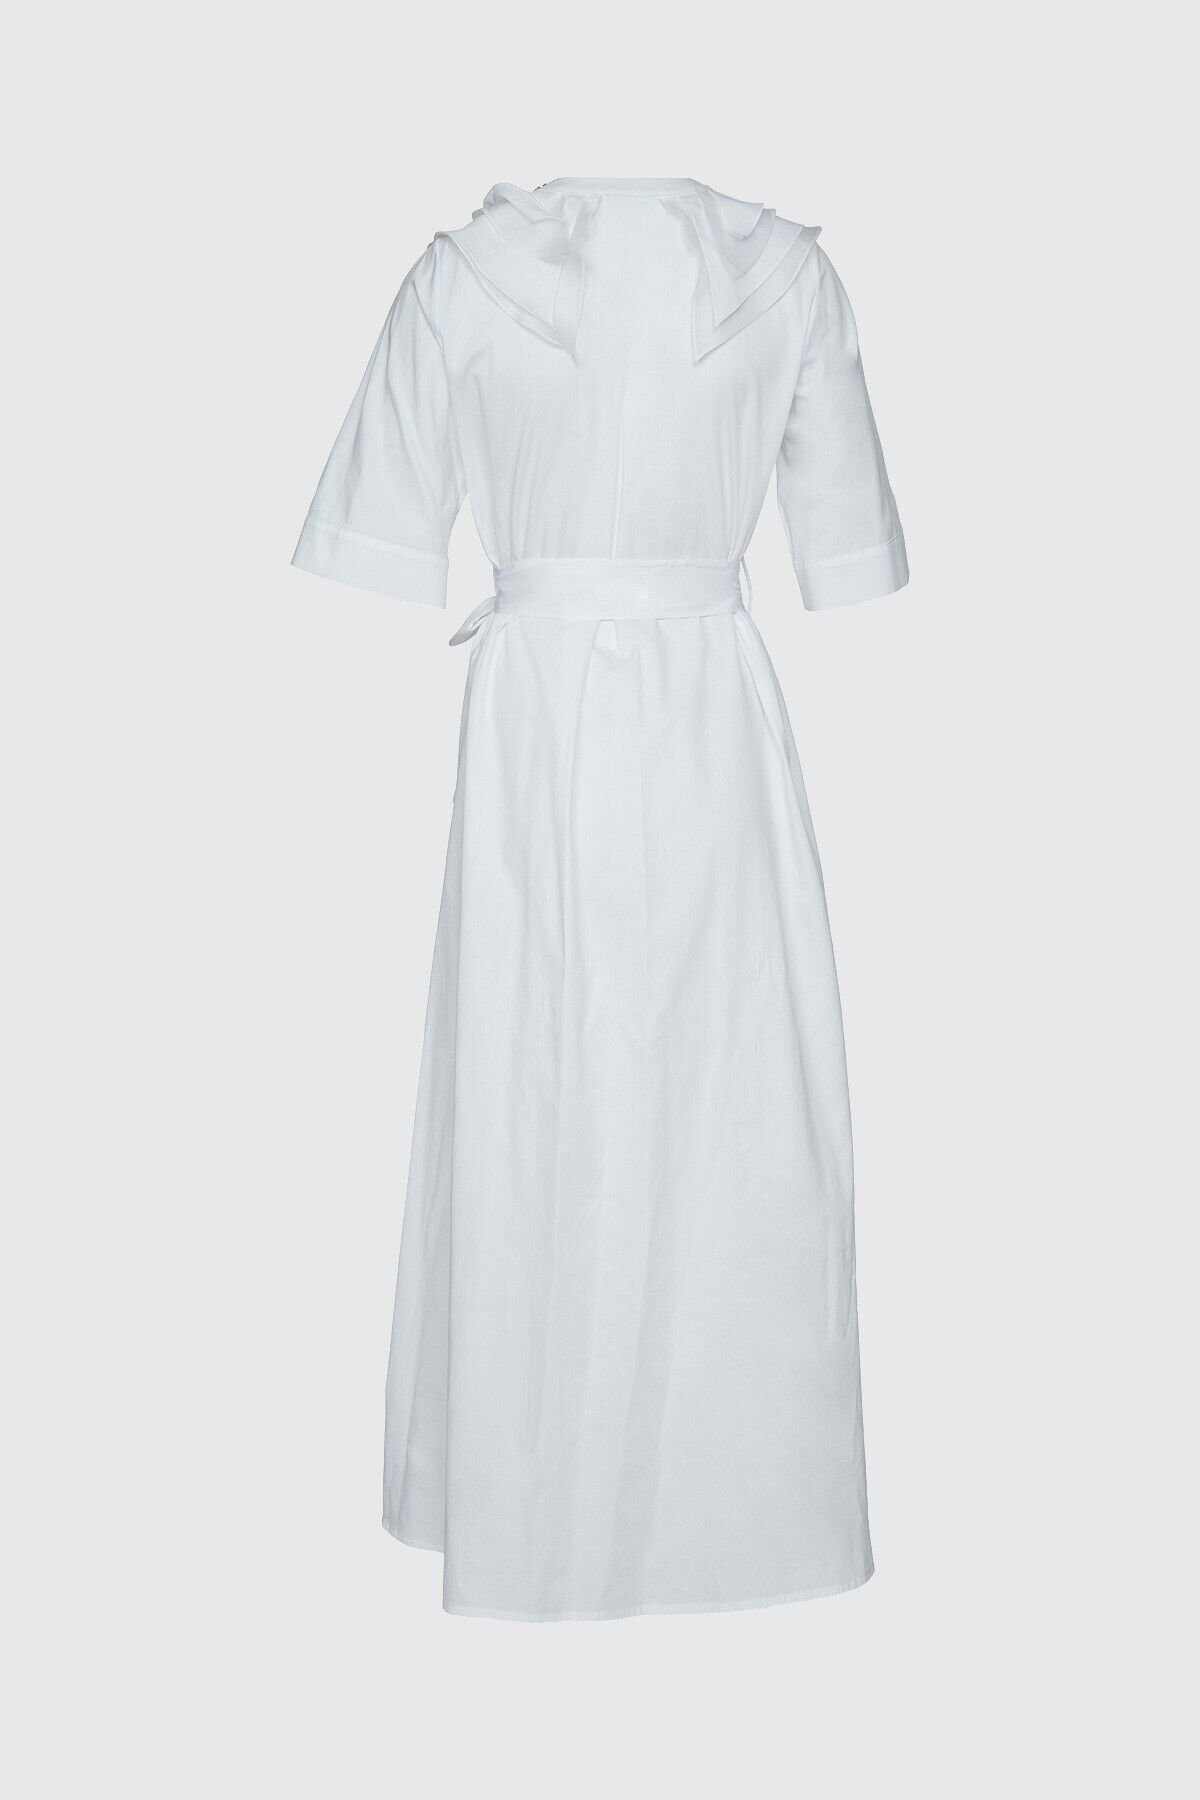 Stone And Waist Sash Tie Detailed Long White Dress